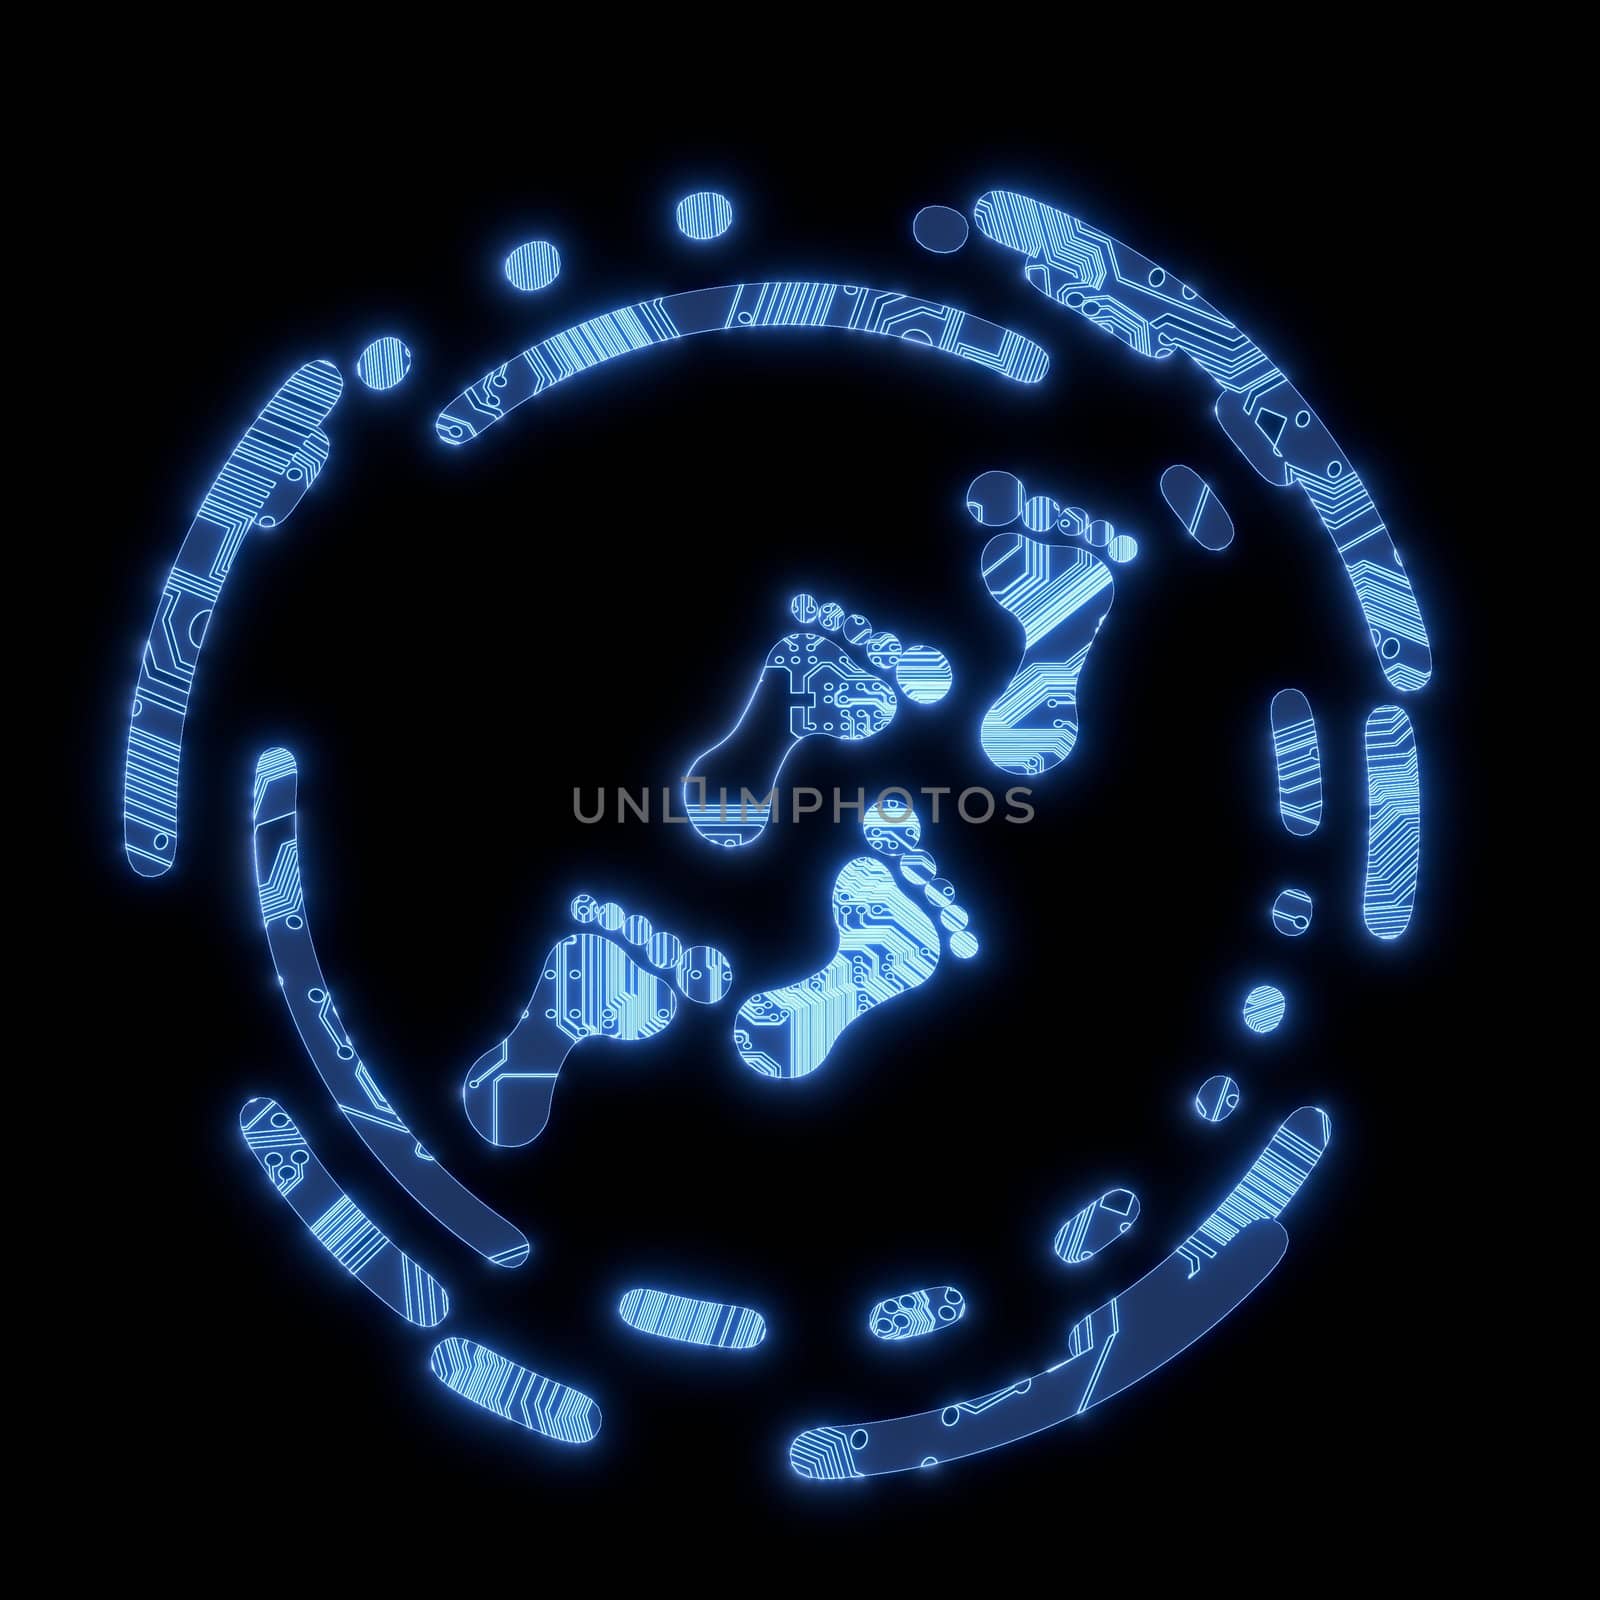 Illuminated blue footprint symbol on a computer chip by onirb